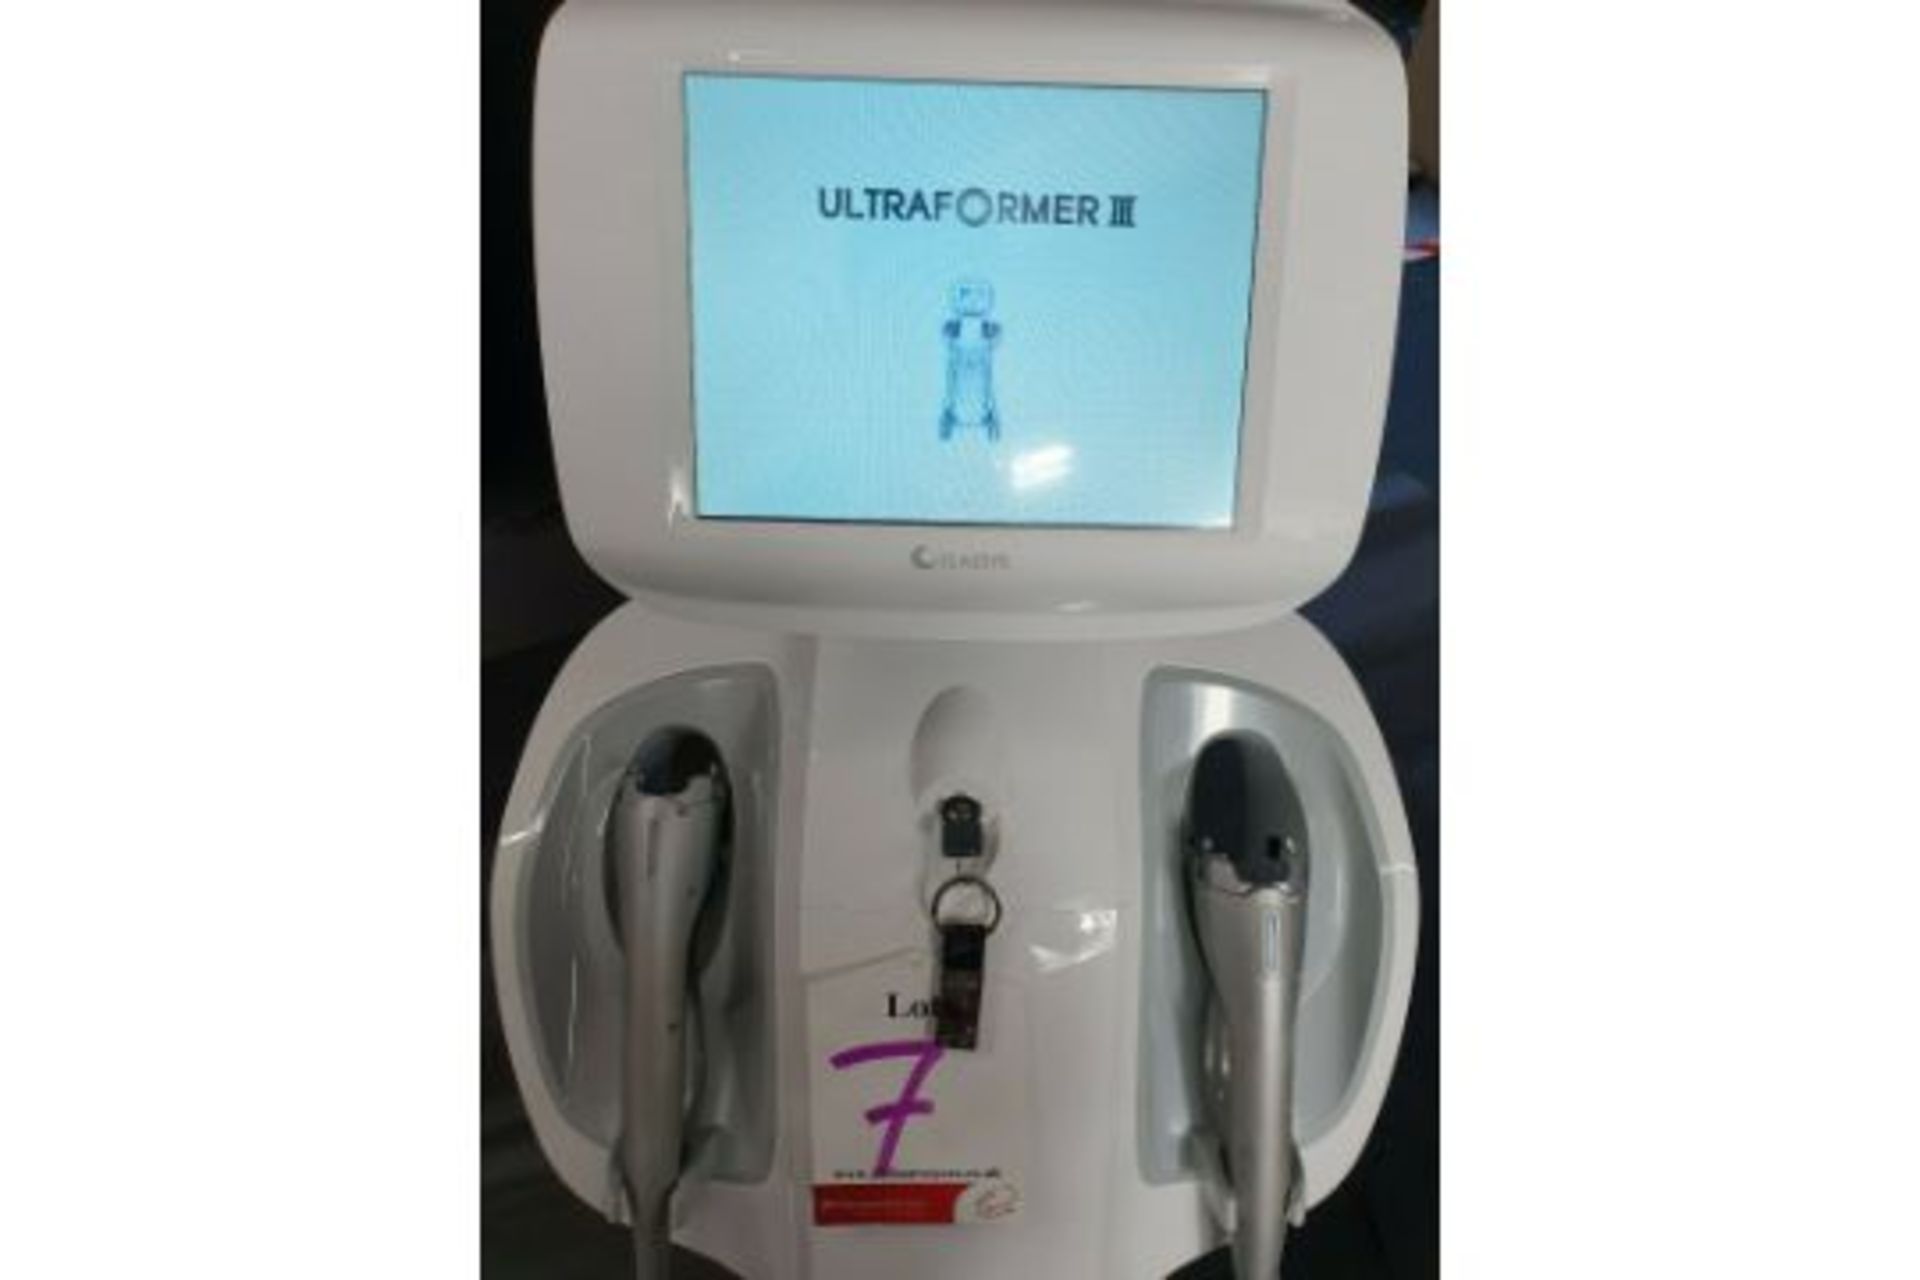 Classy's UF3-M300 Focused Ultrasound Ultraformer | YOM: 2016 - Image 5 of 6